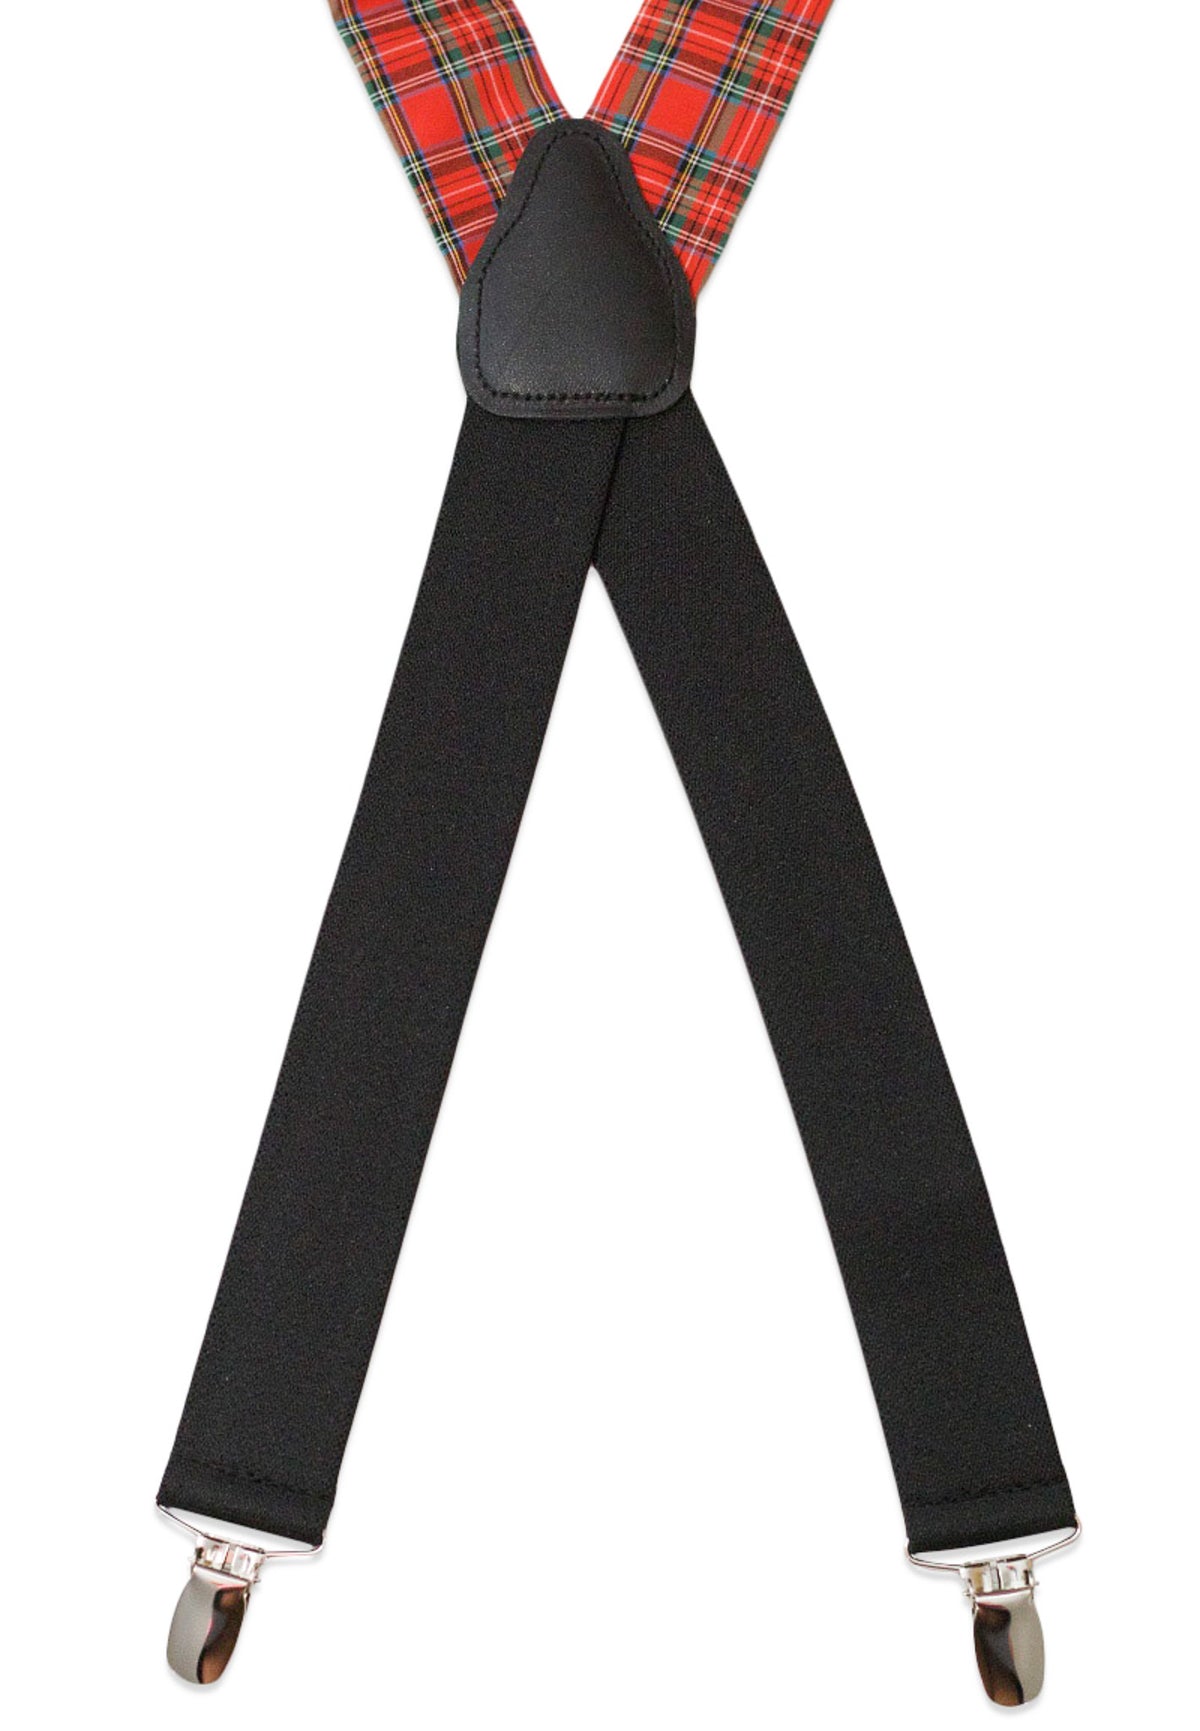 MacIntosh Tartan Suspenders